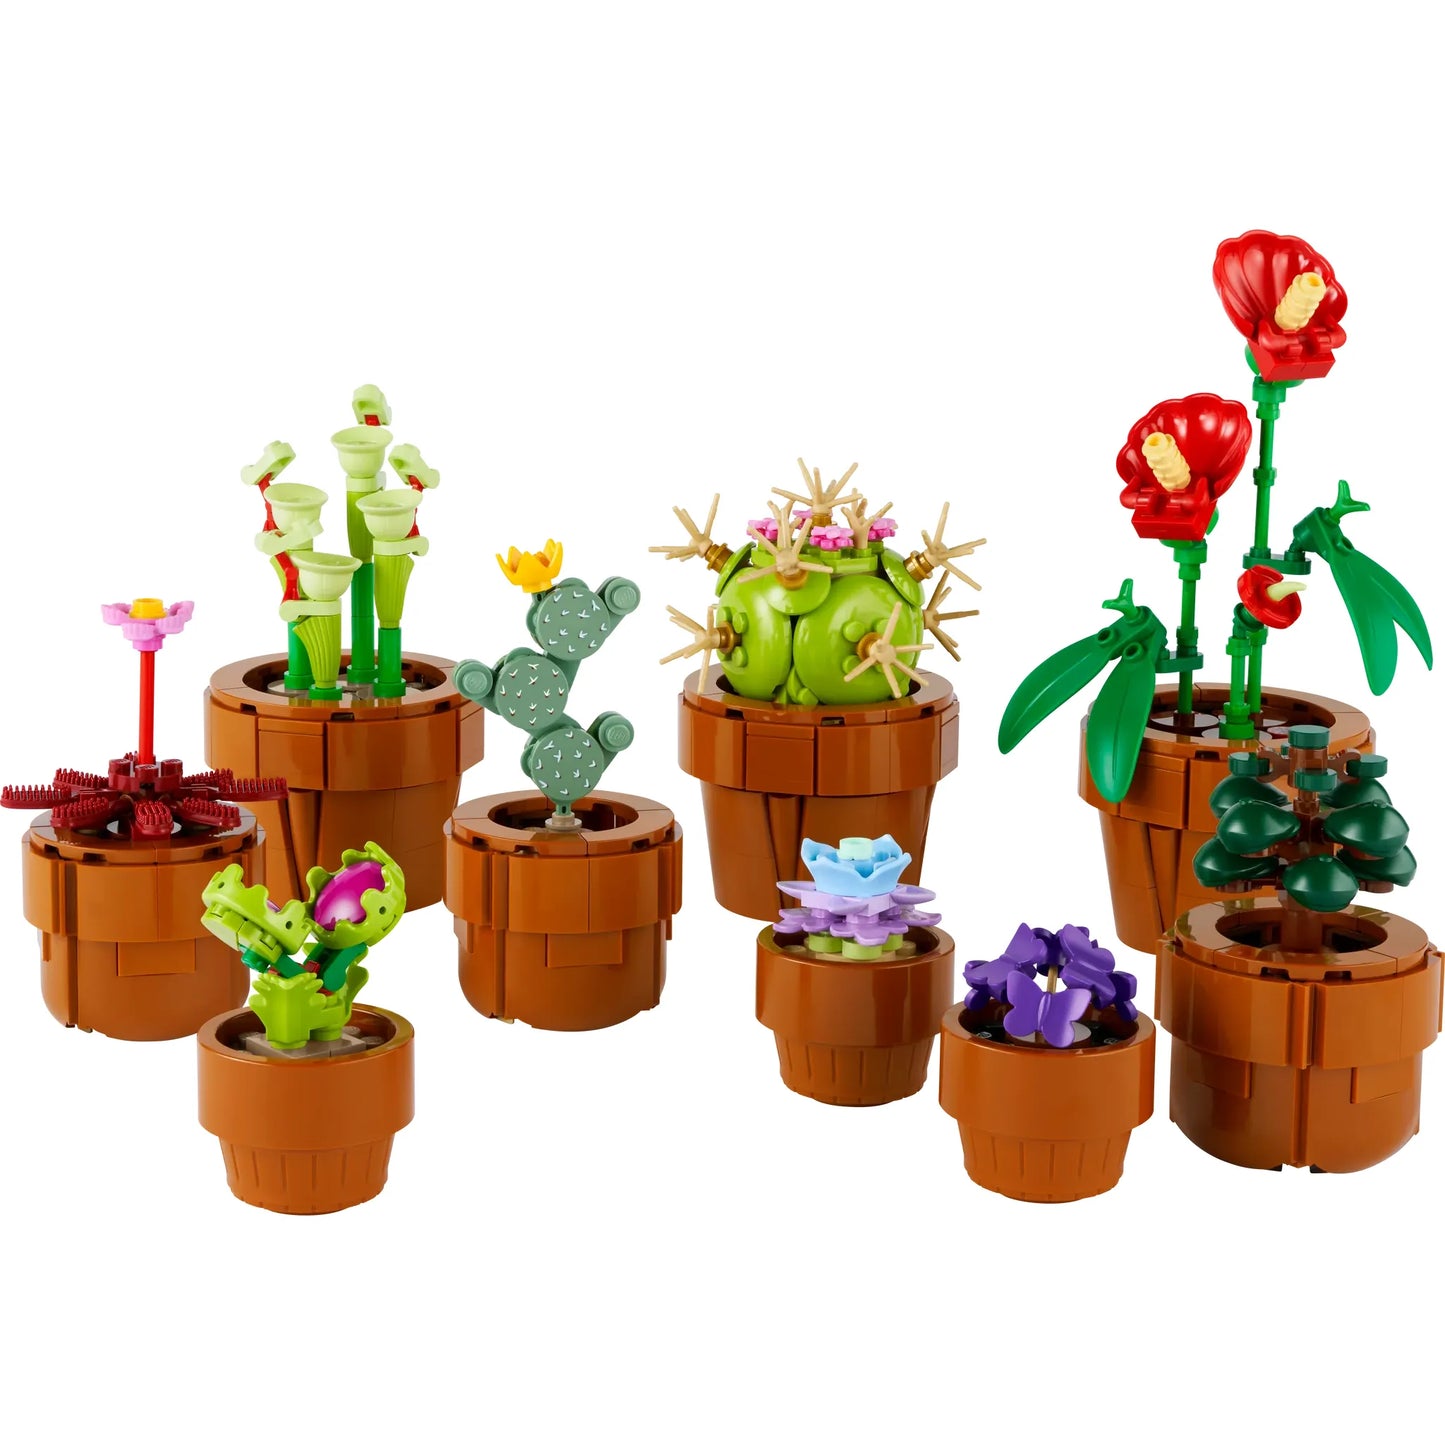 Botanical Collection: Tiny Plants Building Kit